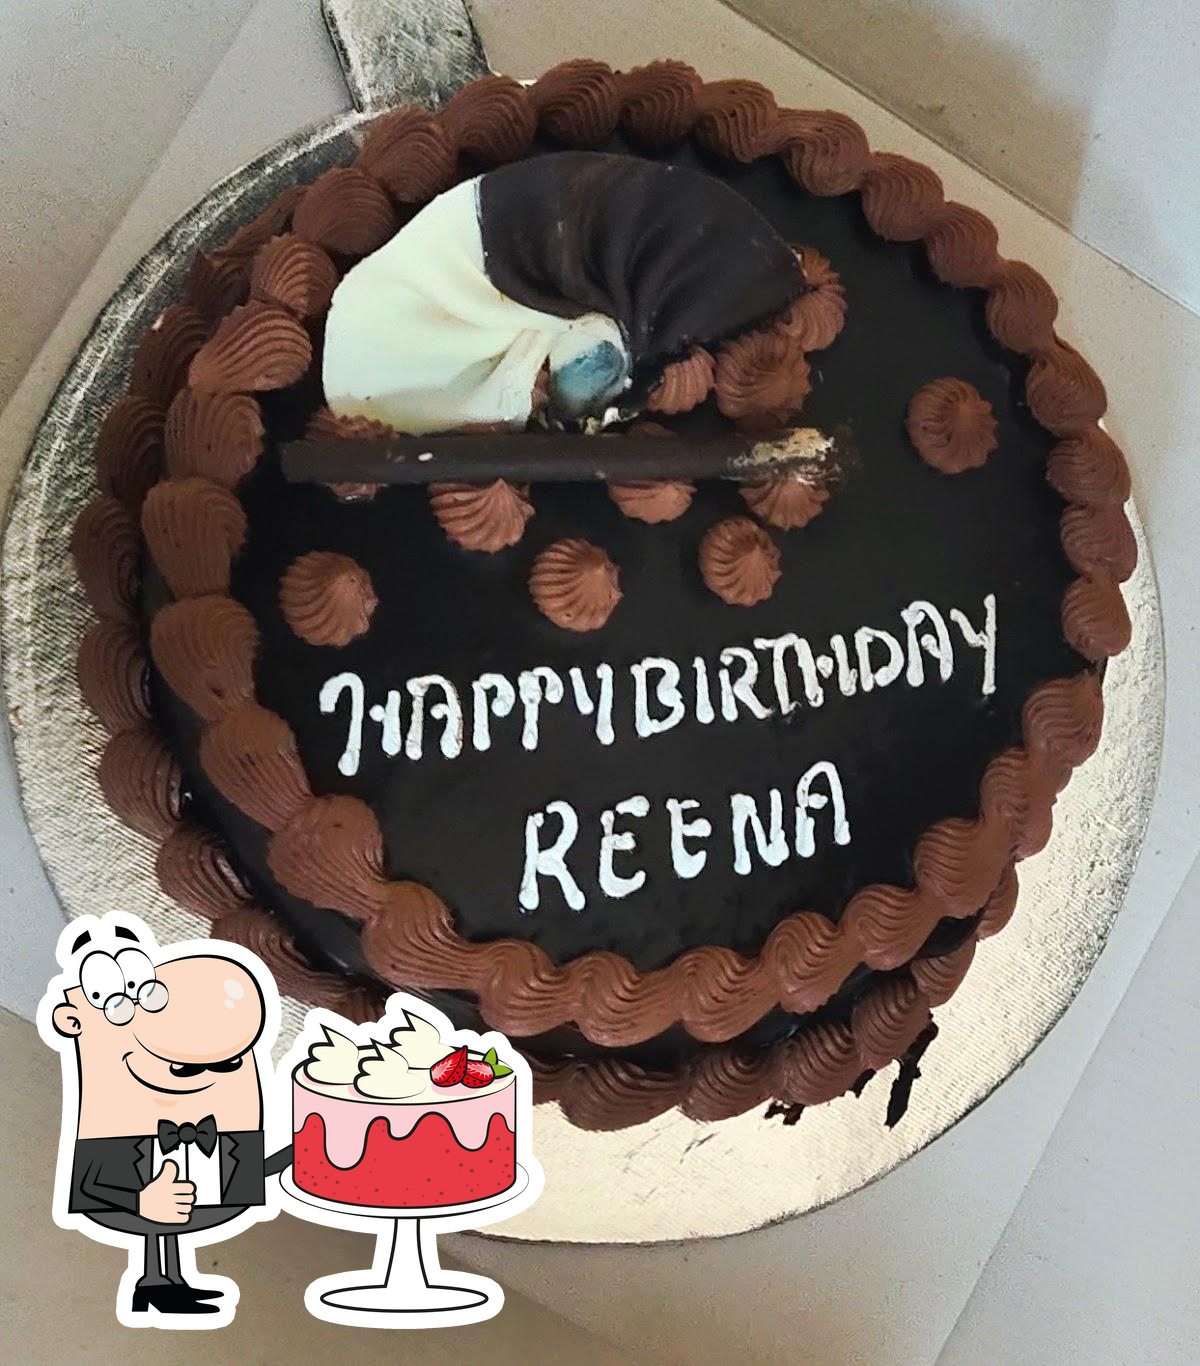 100+ HD Happy Birthday Reena Cake Images And Shayari